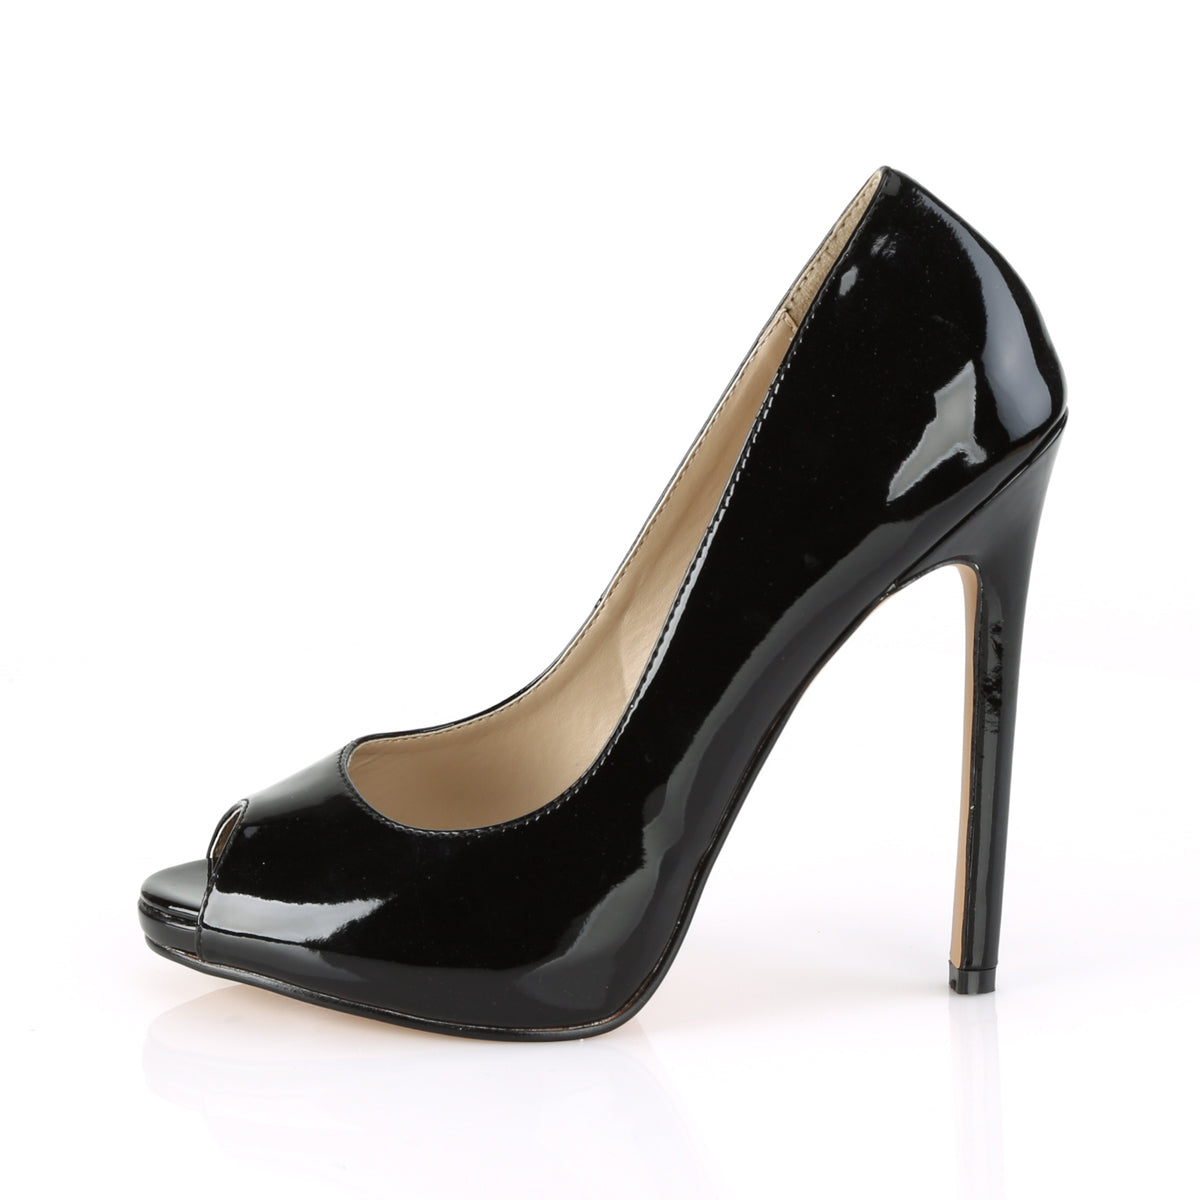 SEXY-42 Pleaser Shoes 5" Heel Black Patent Fetish Footwear-Pleaser- Sexy Shoes Pole Dance Heels